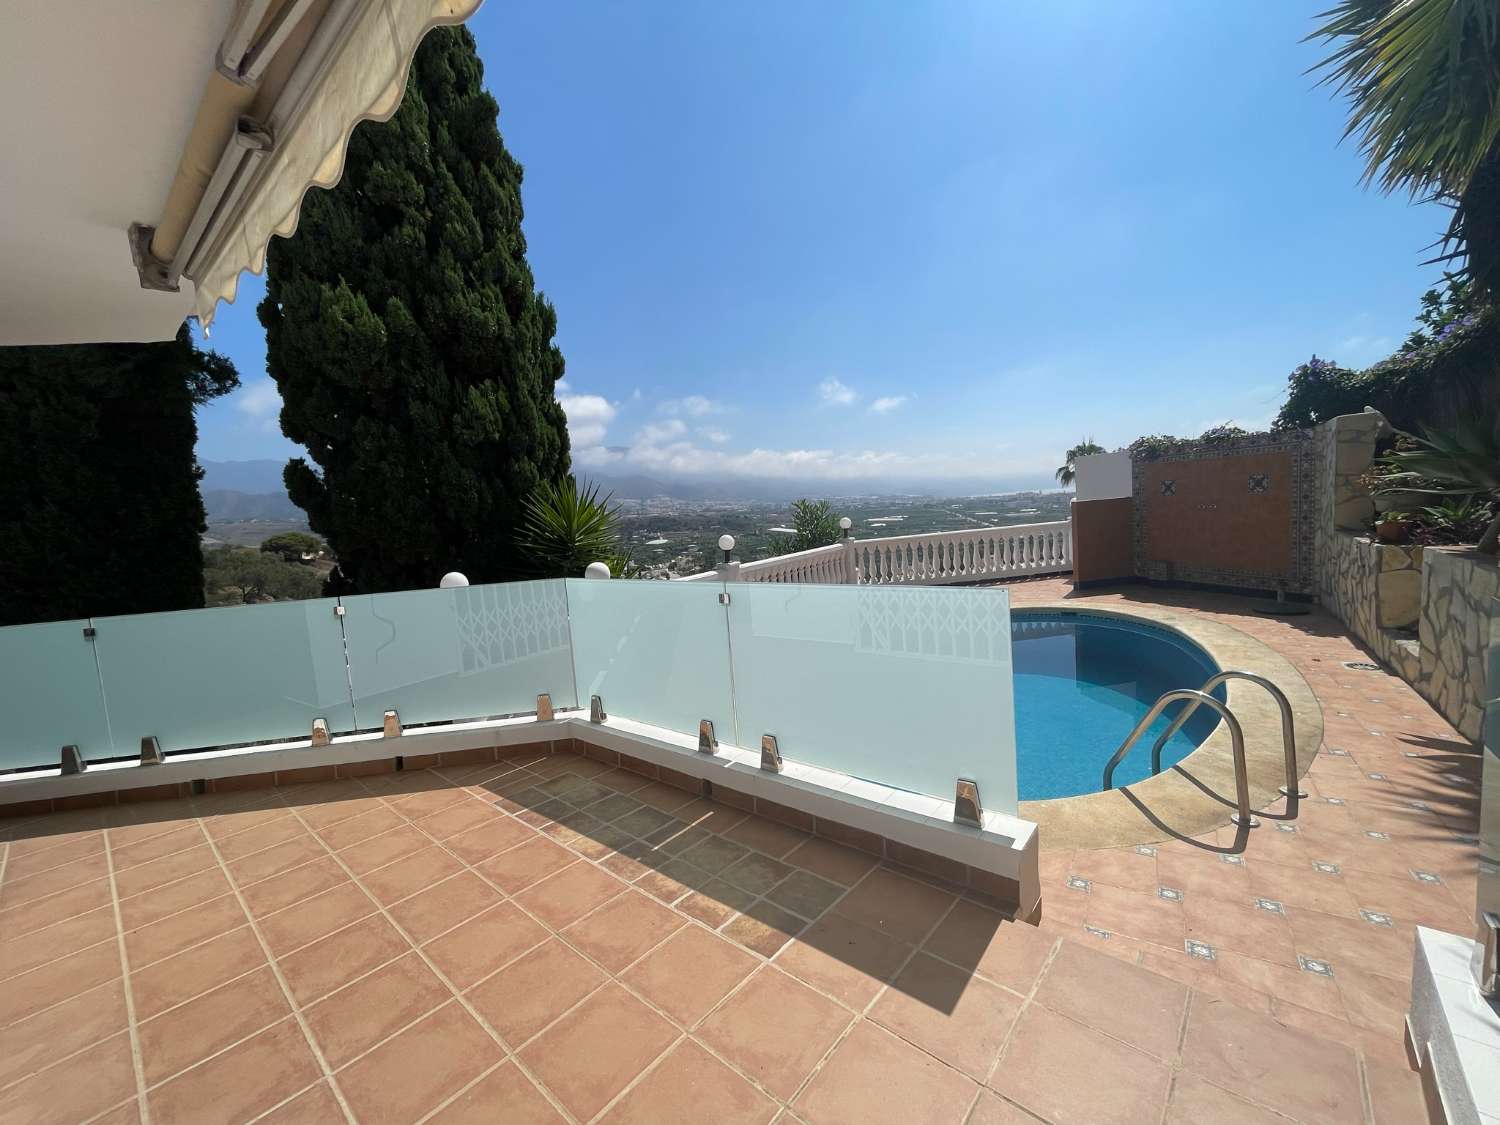 Villa with spectacular views, private pool and 3 bedrooms in Punta Lara, Nerja